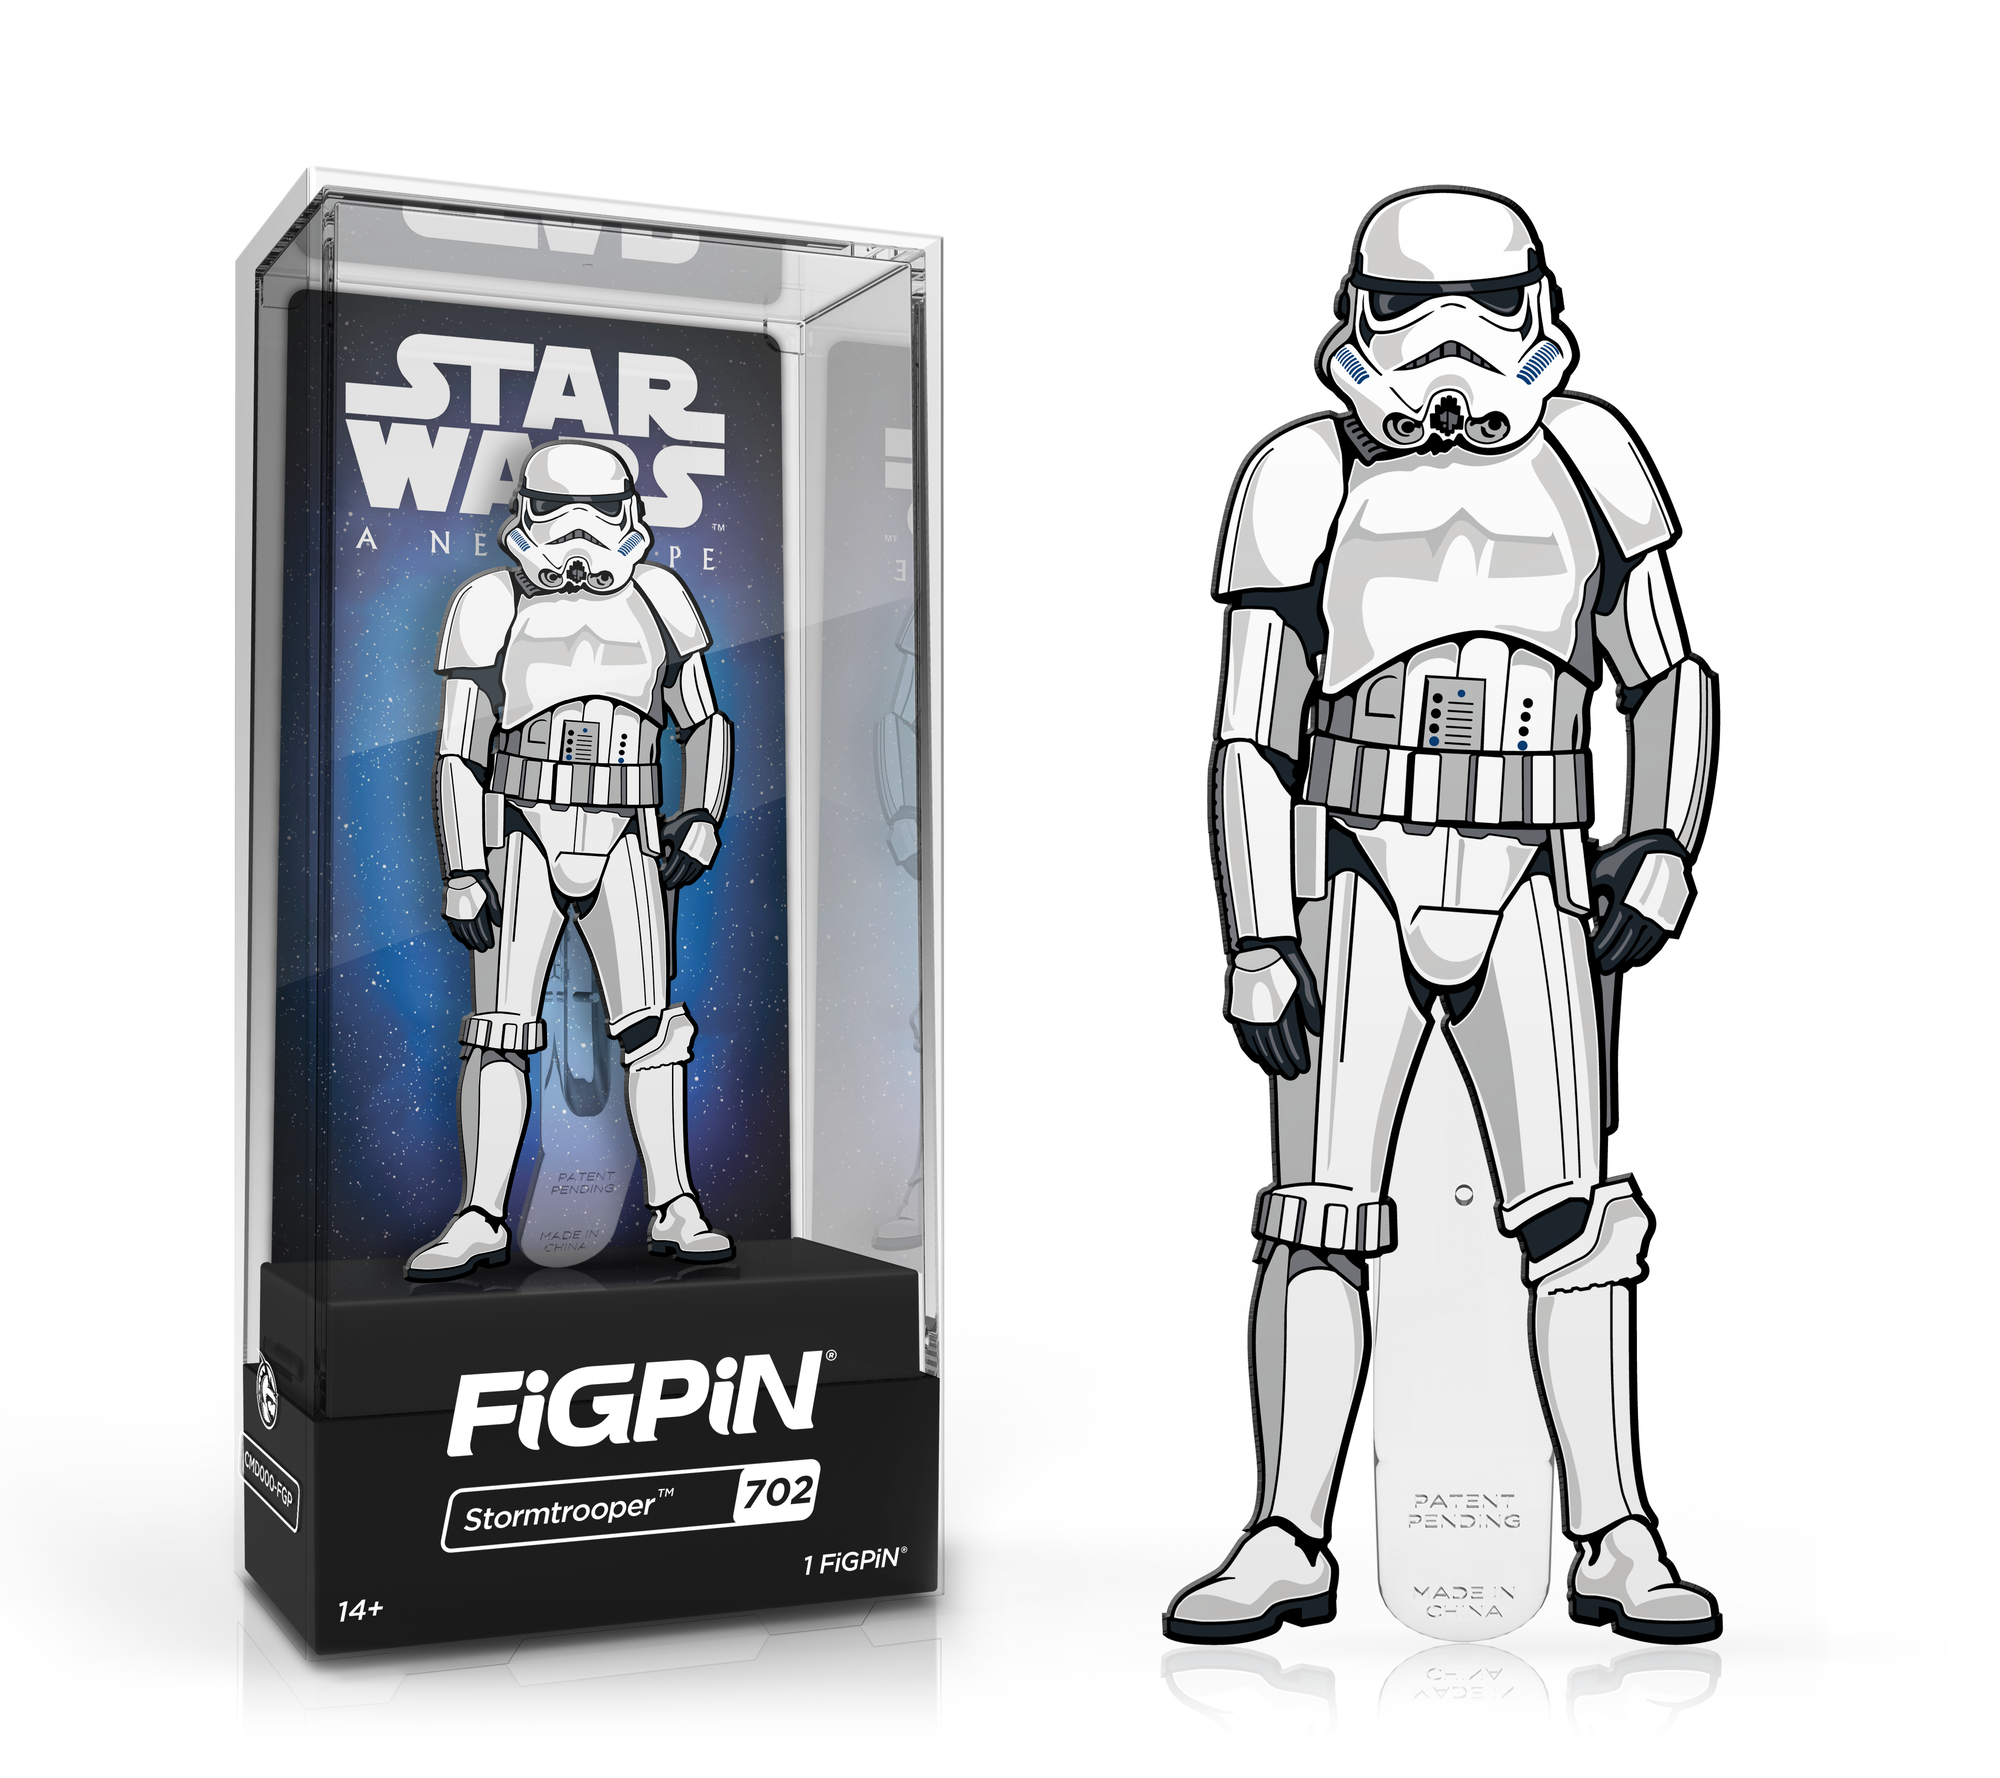 Figpin: Stormtrooper 702